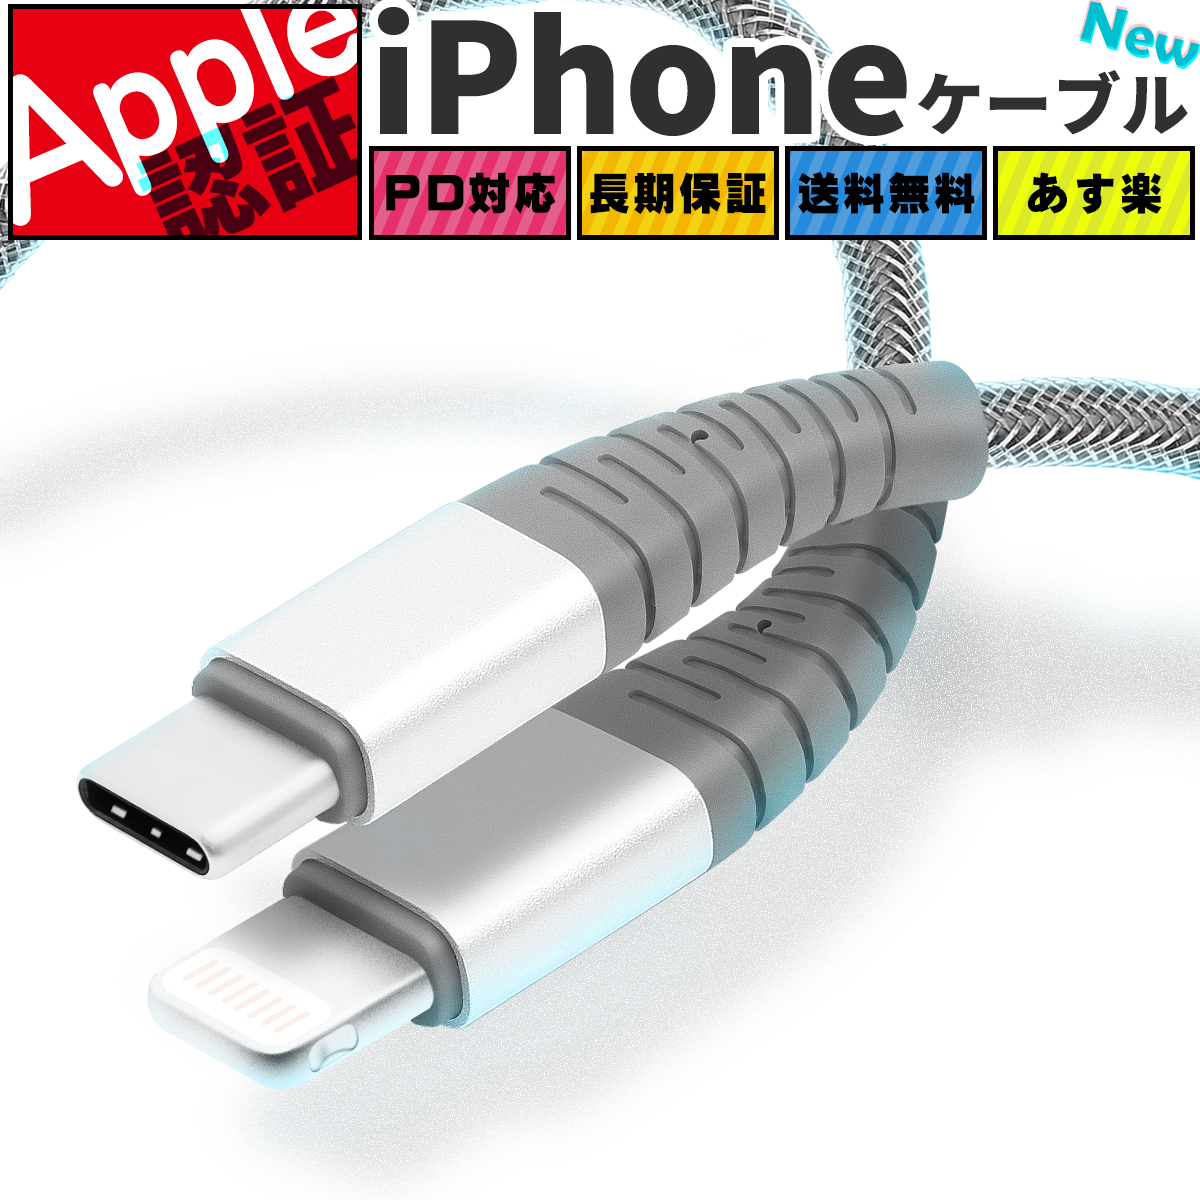 【 Apple認証済み 】iPhone 充電 ケーブル USB Type C to Lightning ケーブル 認証品 MFi PD 充電器  ライトニングケーブル iPhoneケーブル 10cm 20cm 50cm 1m 2m 純正品質 MFi 12 SE2 11 X 8 iPad  apple 